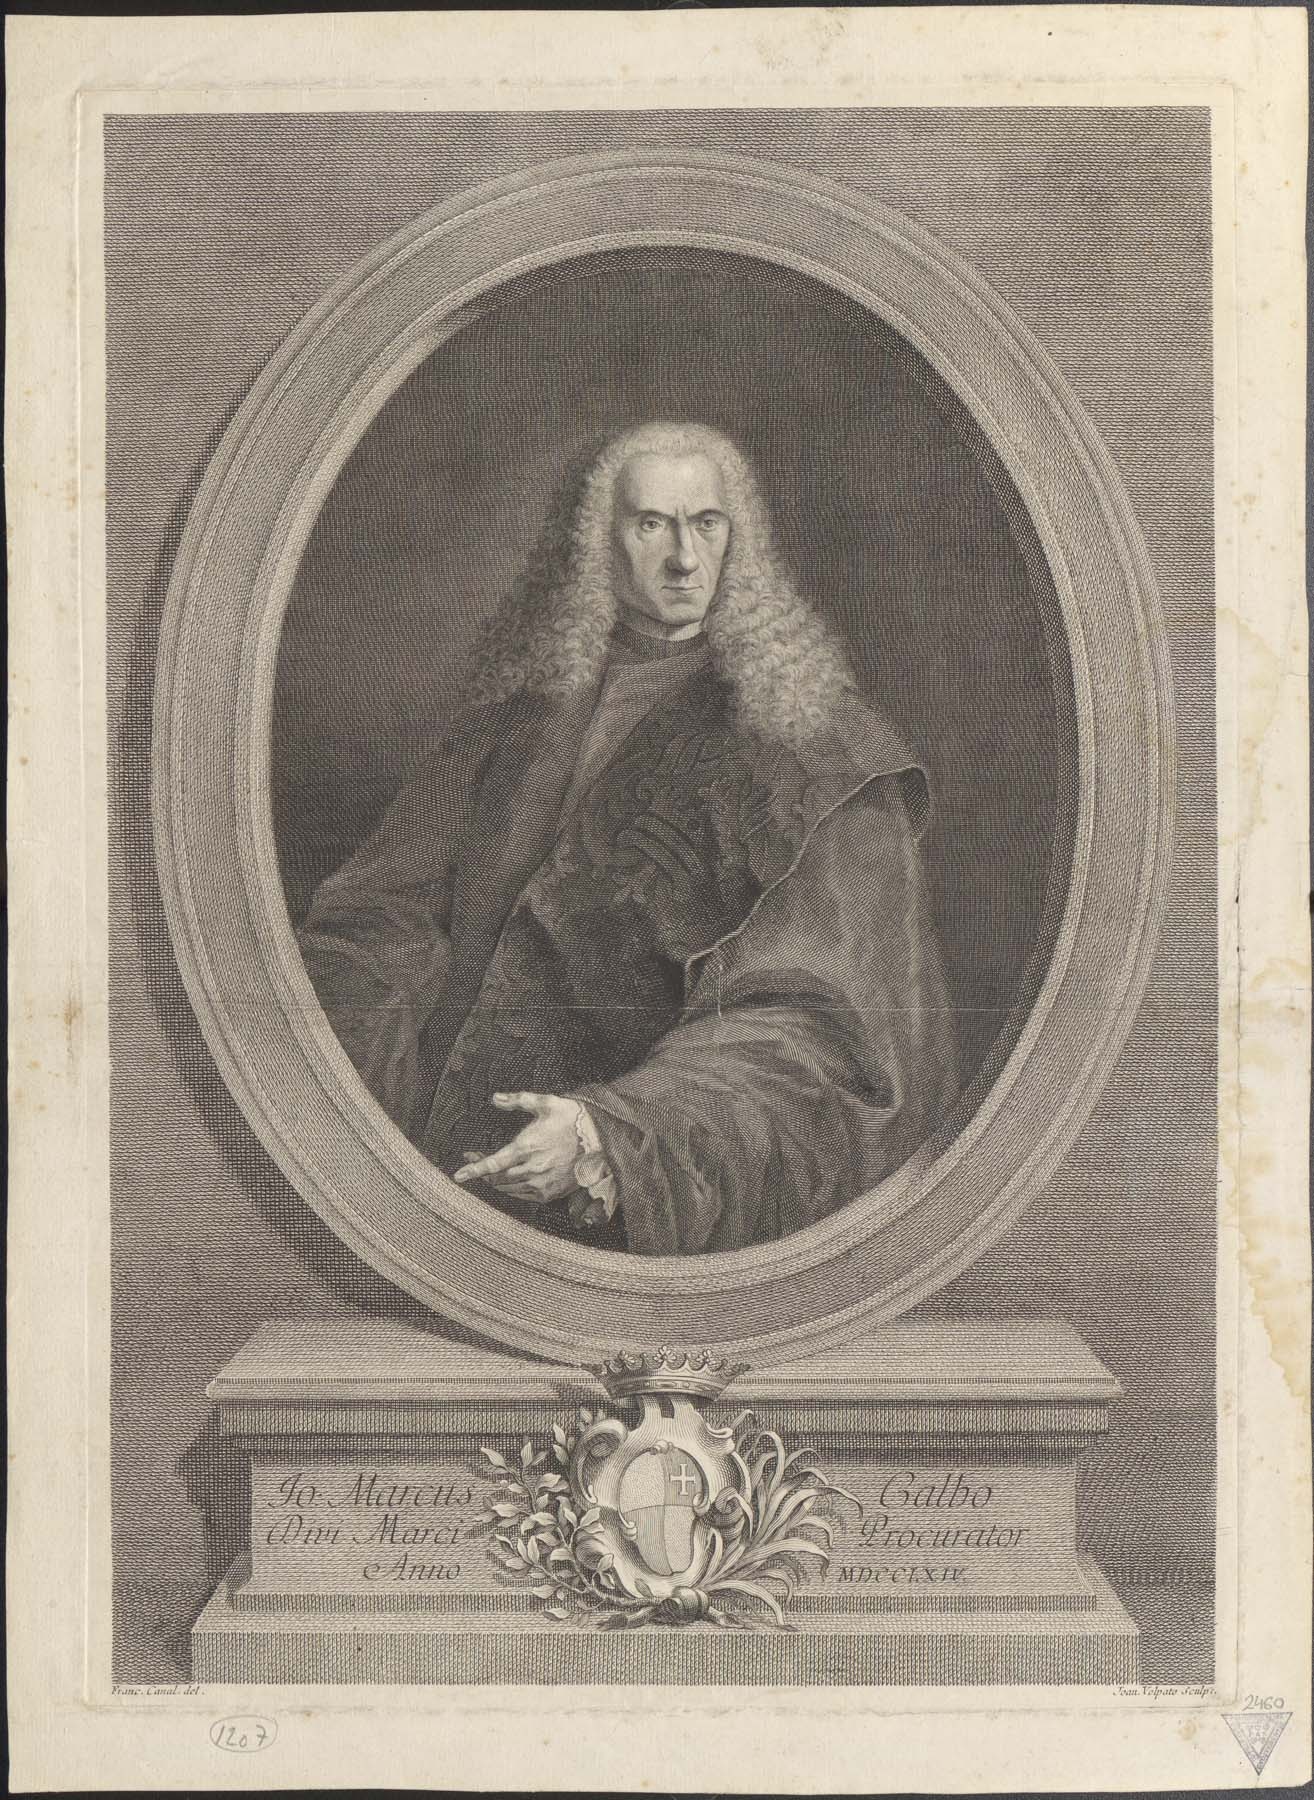 Marcus Galbo, 1764 (Pannonhalma Főapátsági Múzeum CC BY-NC-SA)